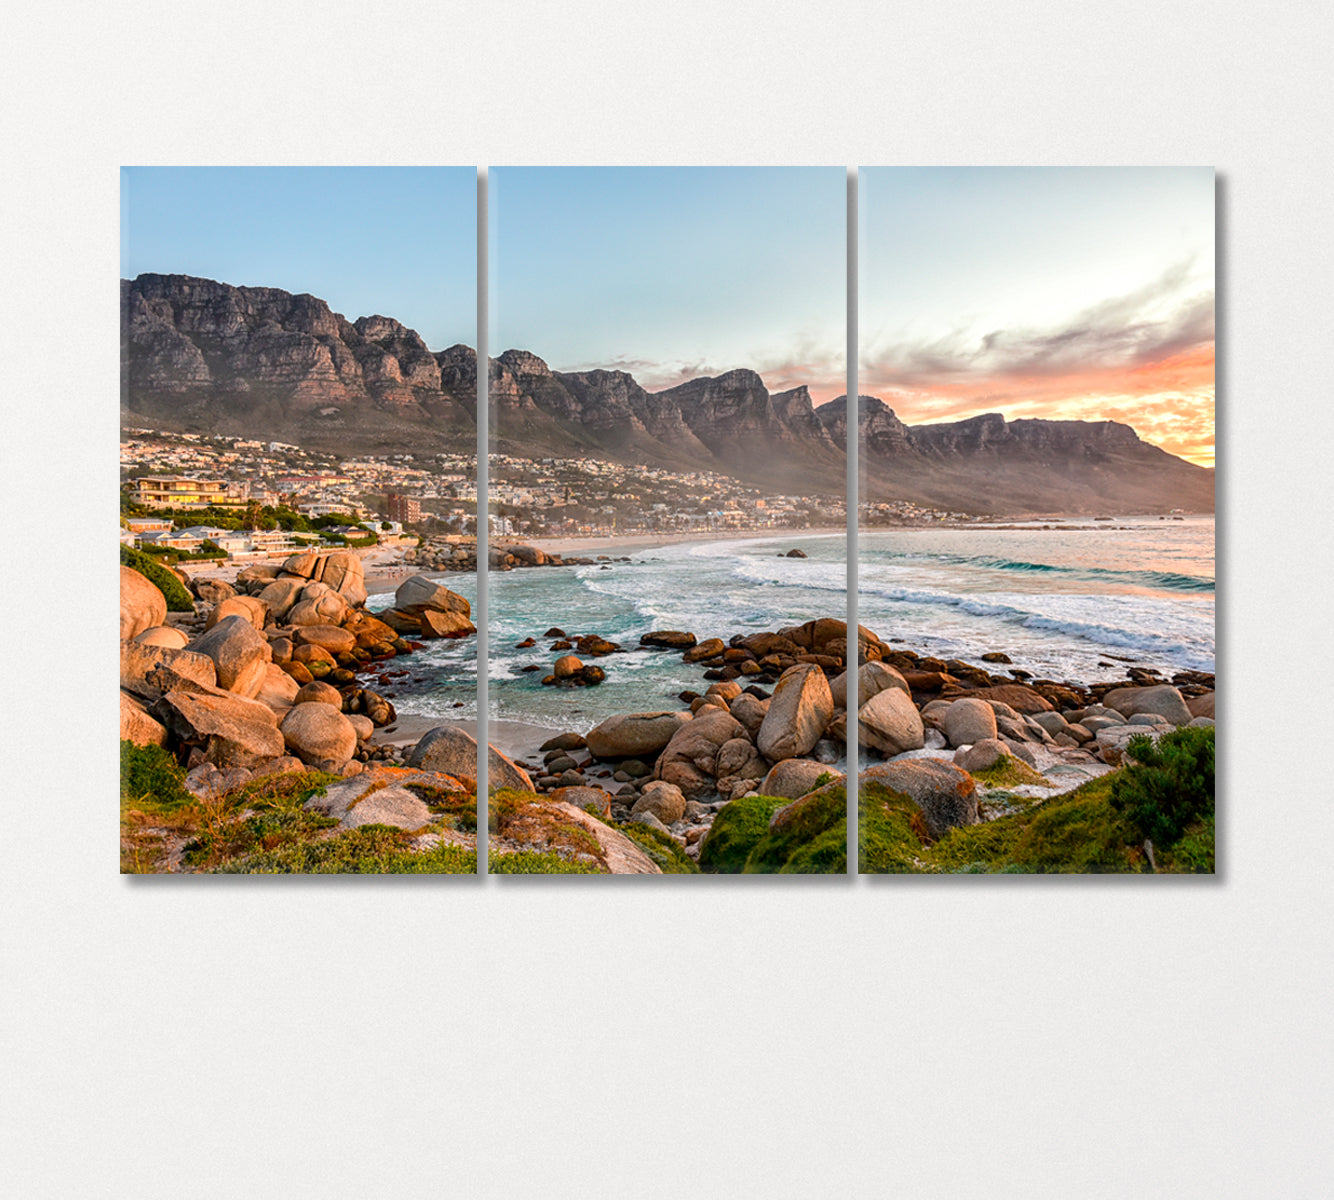 Camps Bay Beach South Africa Canvas Print-Canvas Print-CetArt-3 Panels-36x24 inches-CetArt